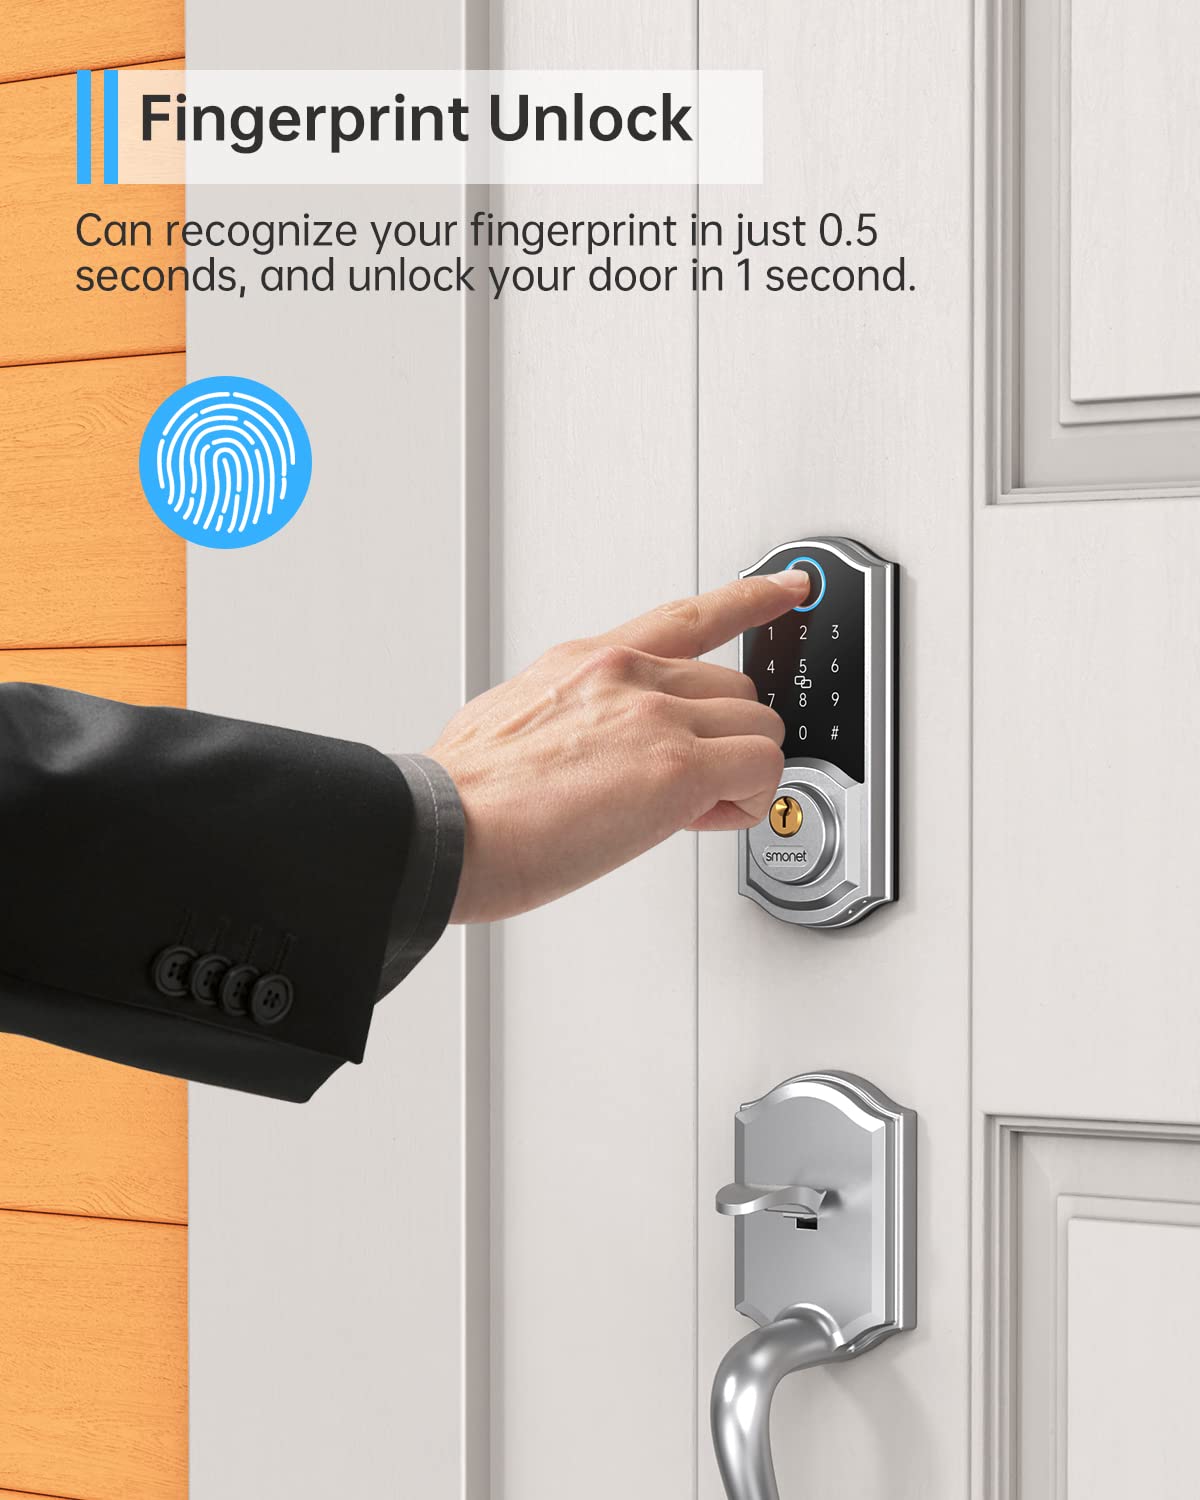 Fingerprint unlock smart locks